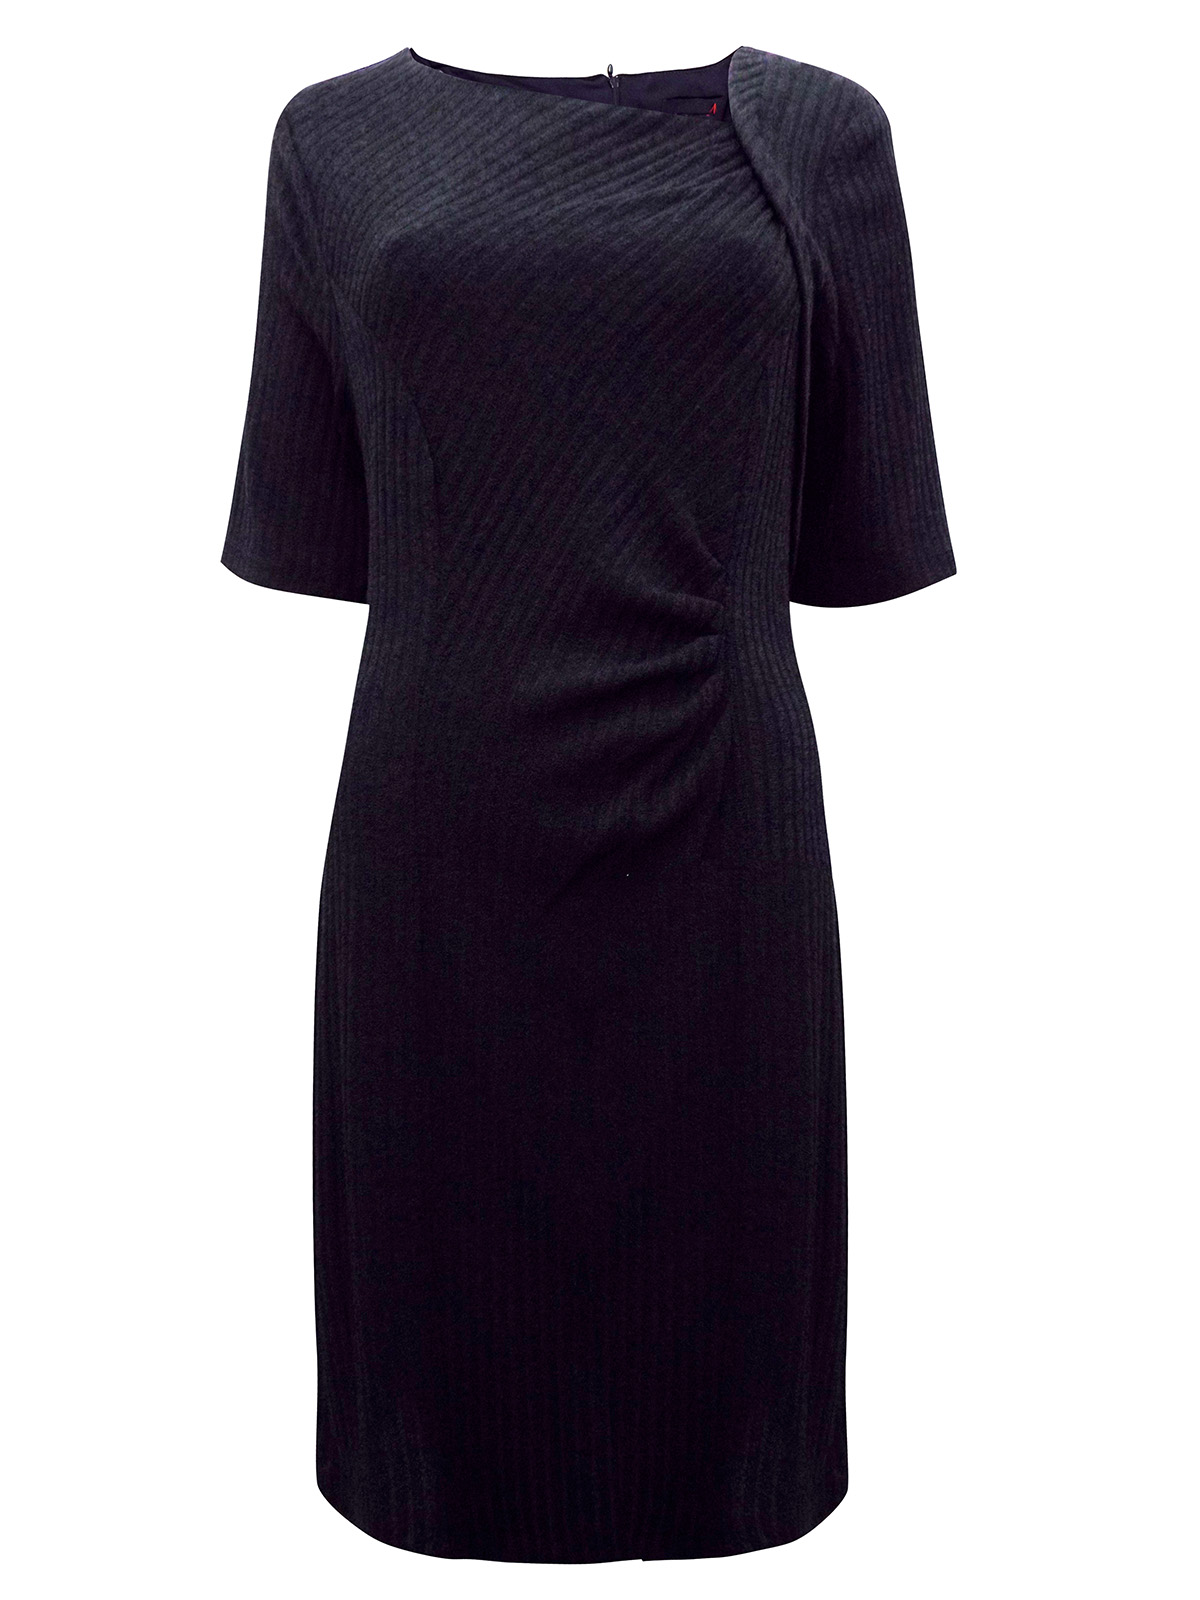 black dress with asymmetrical neckline